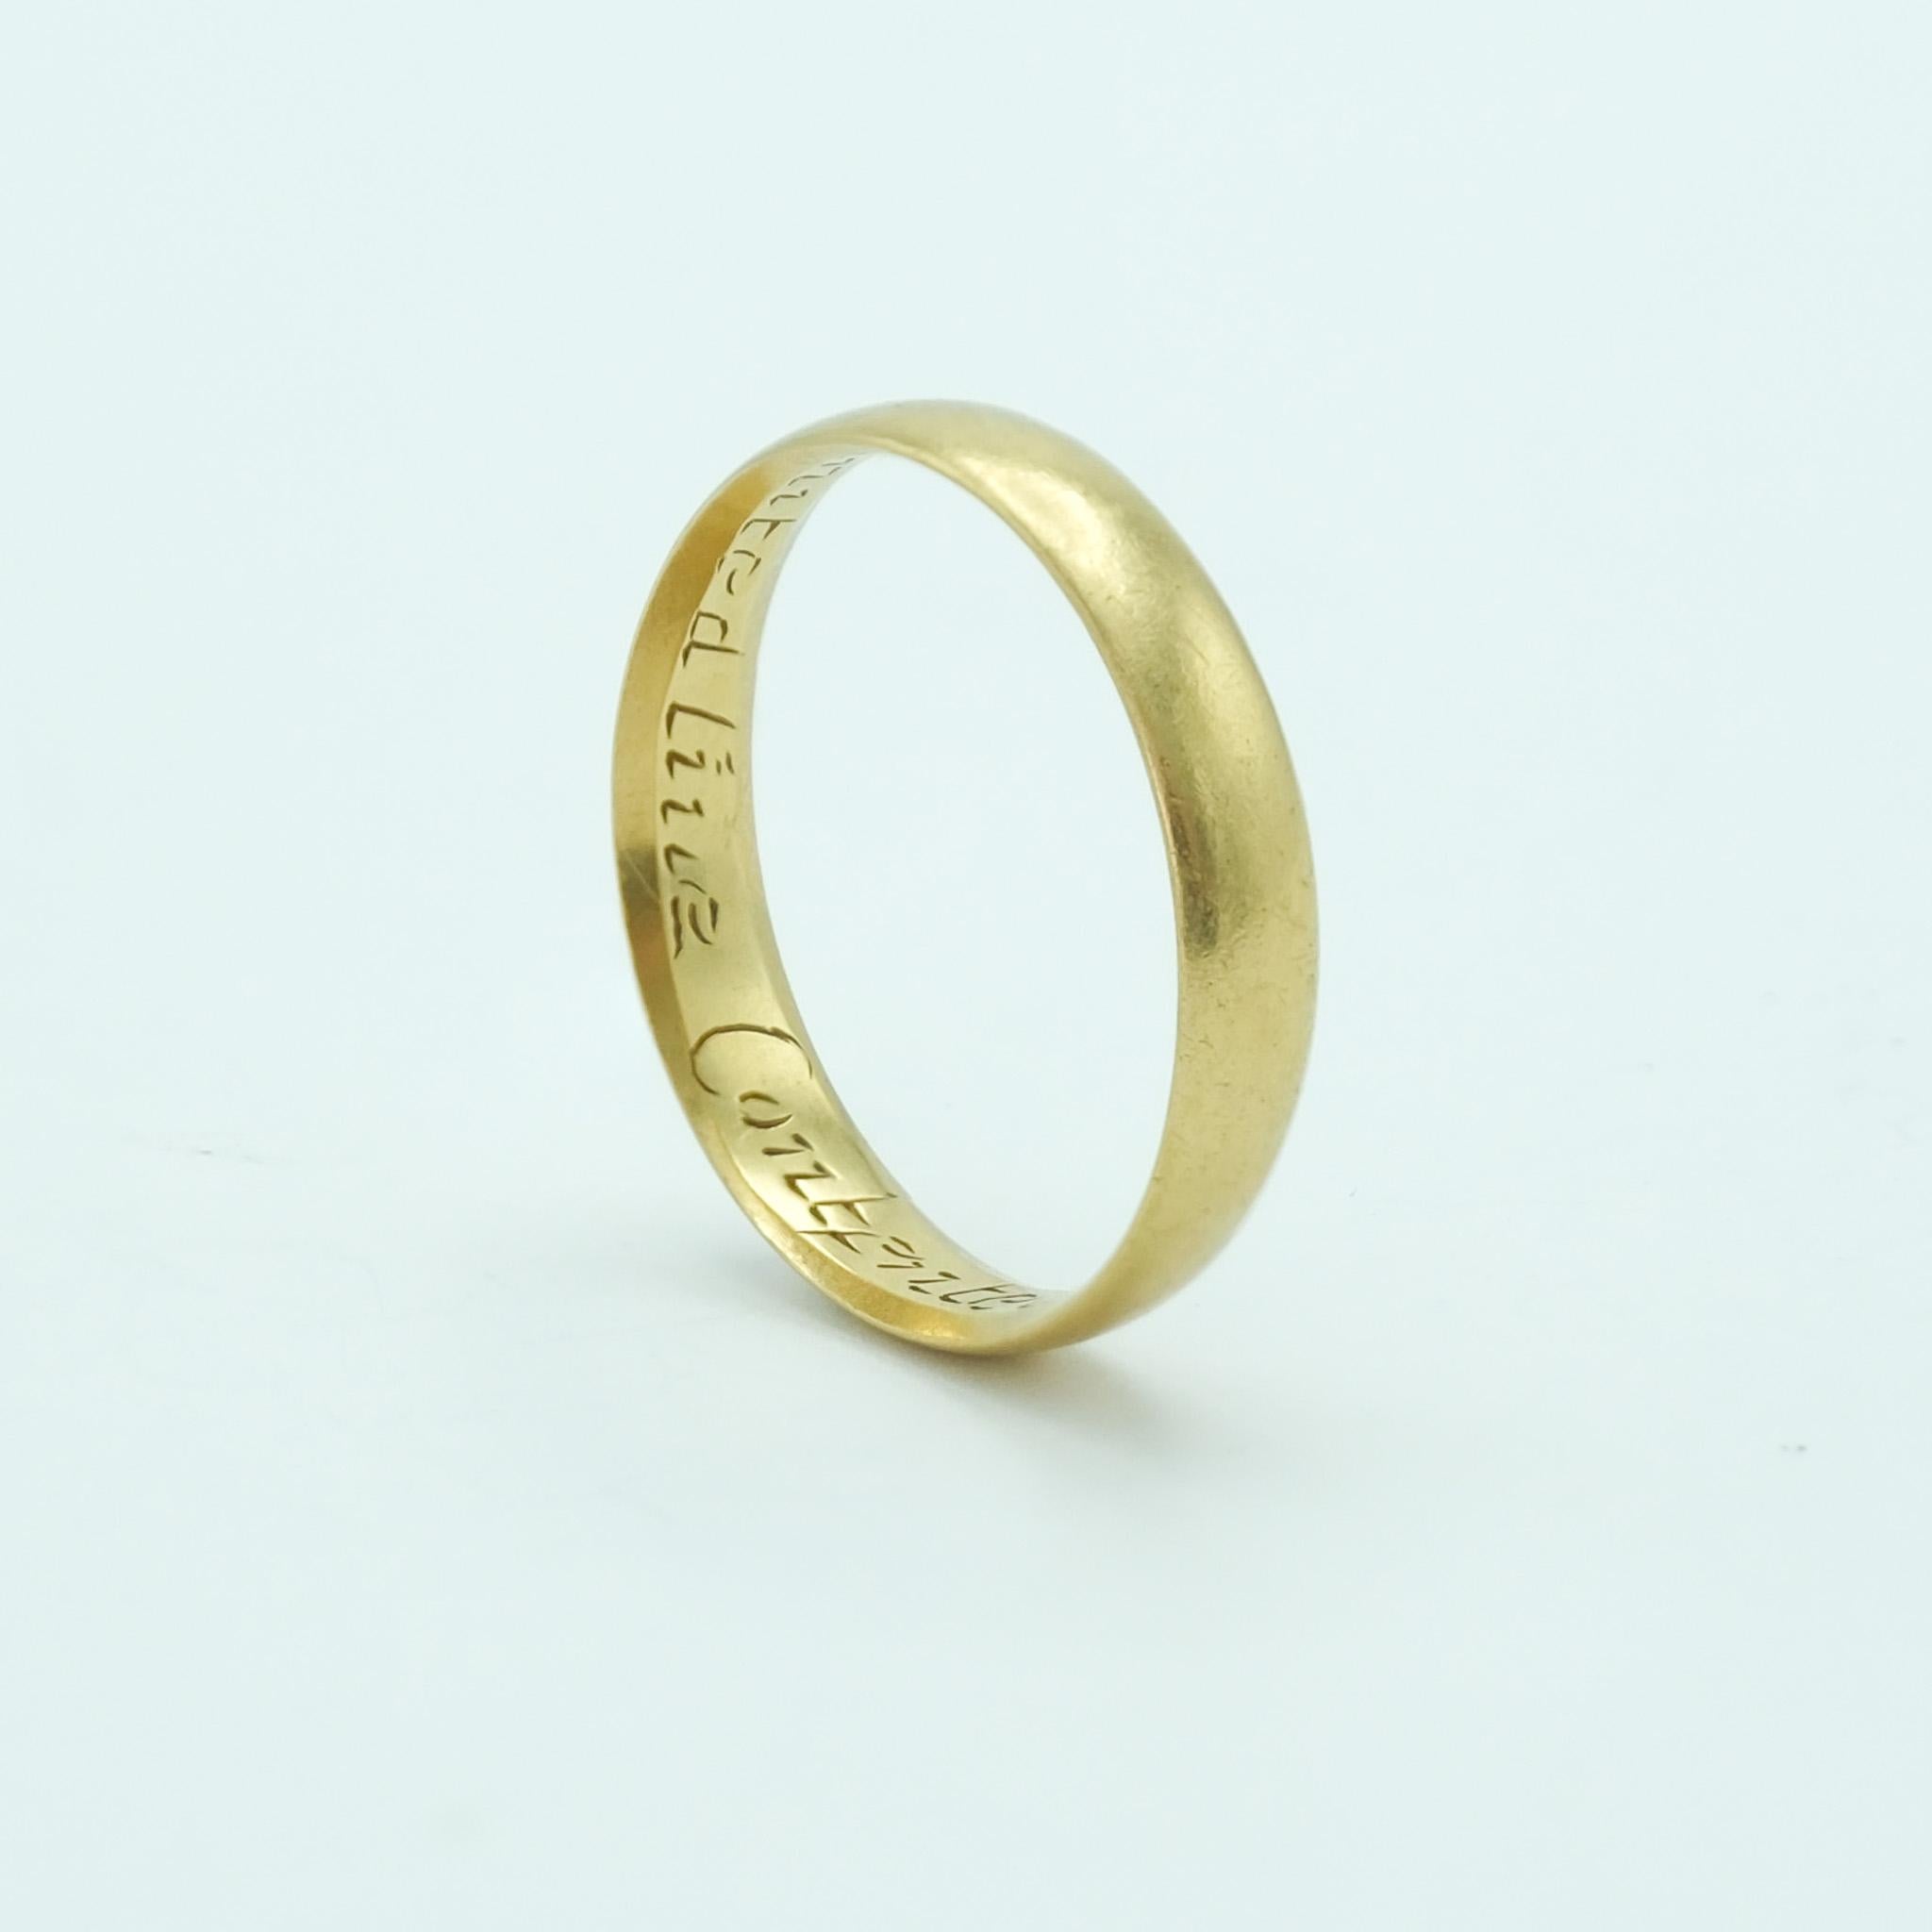 Renaissance Antique English Posy Ring in 18 Karat Yellow Gold: Antique Wedding Band